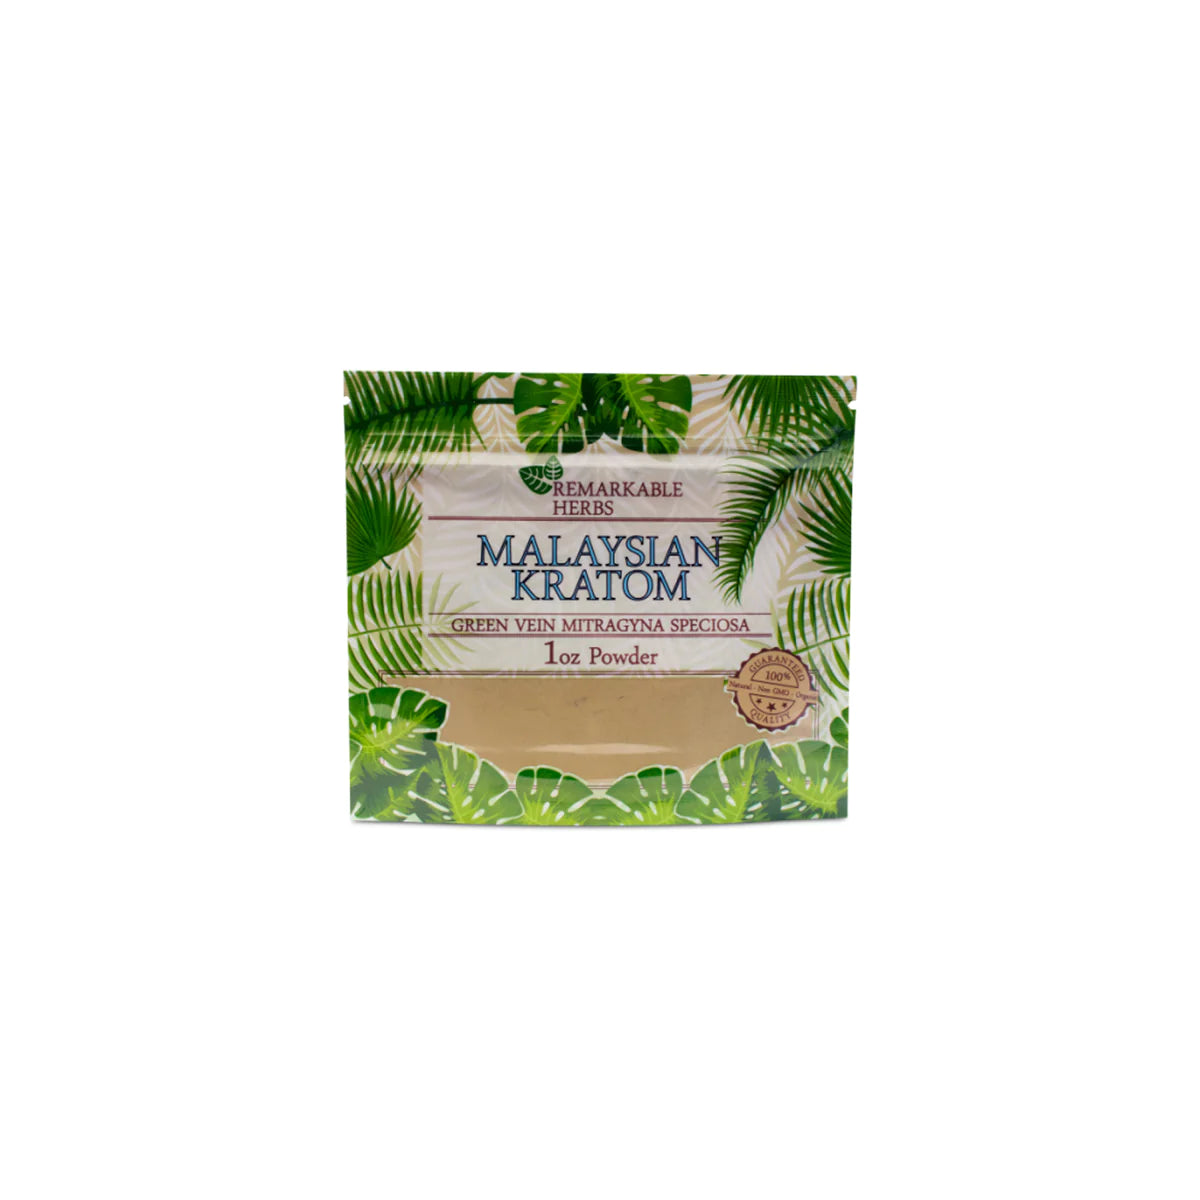 Remarkable Herbs Kratom Powder 1 oz Bag